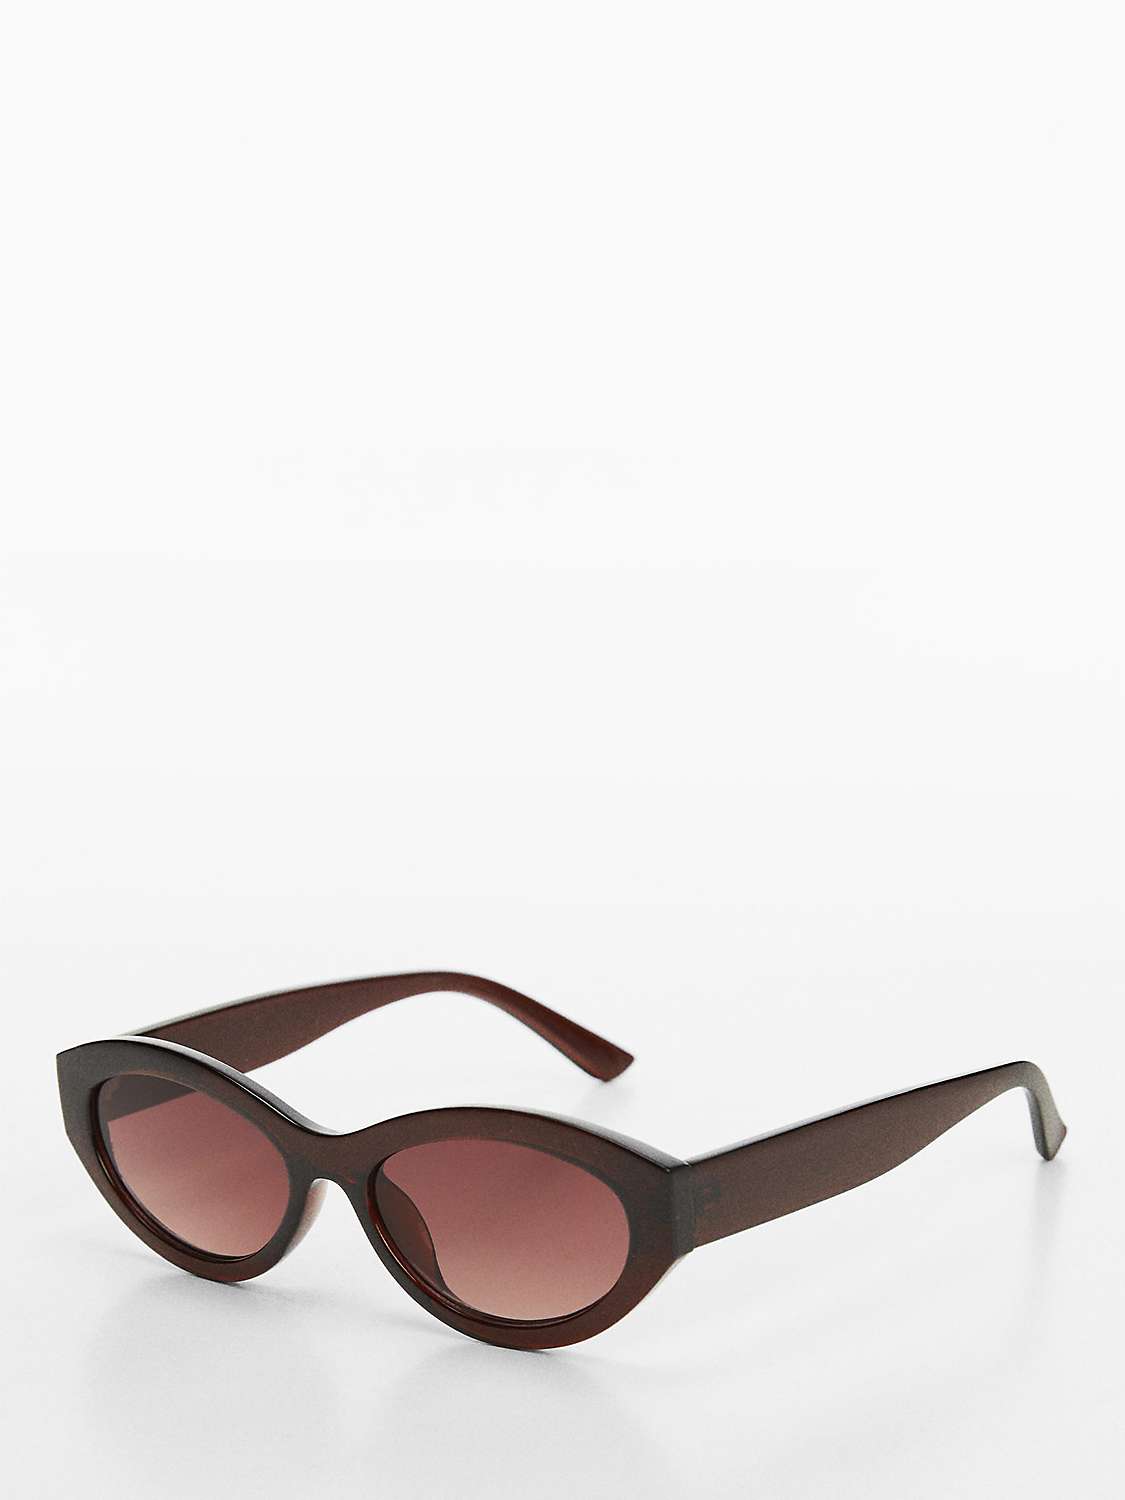 Buy Mango Women's Marina Oval Sunglasses, Brown/Red Gradient Online at johnlewis.com